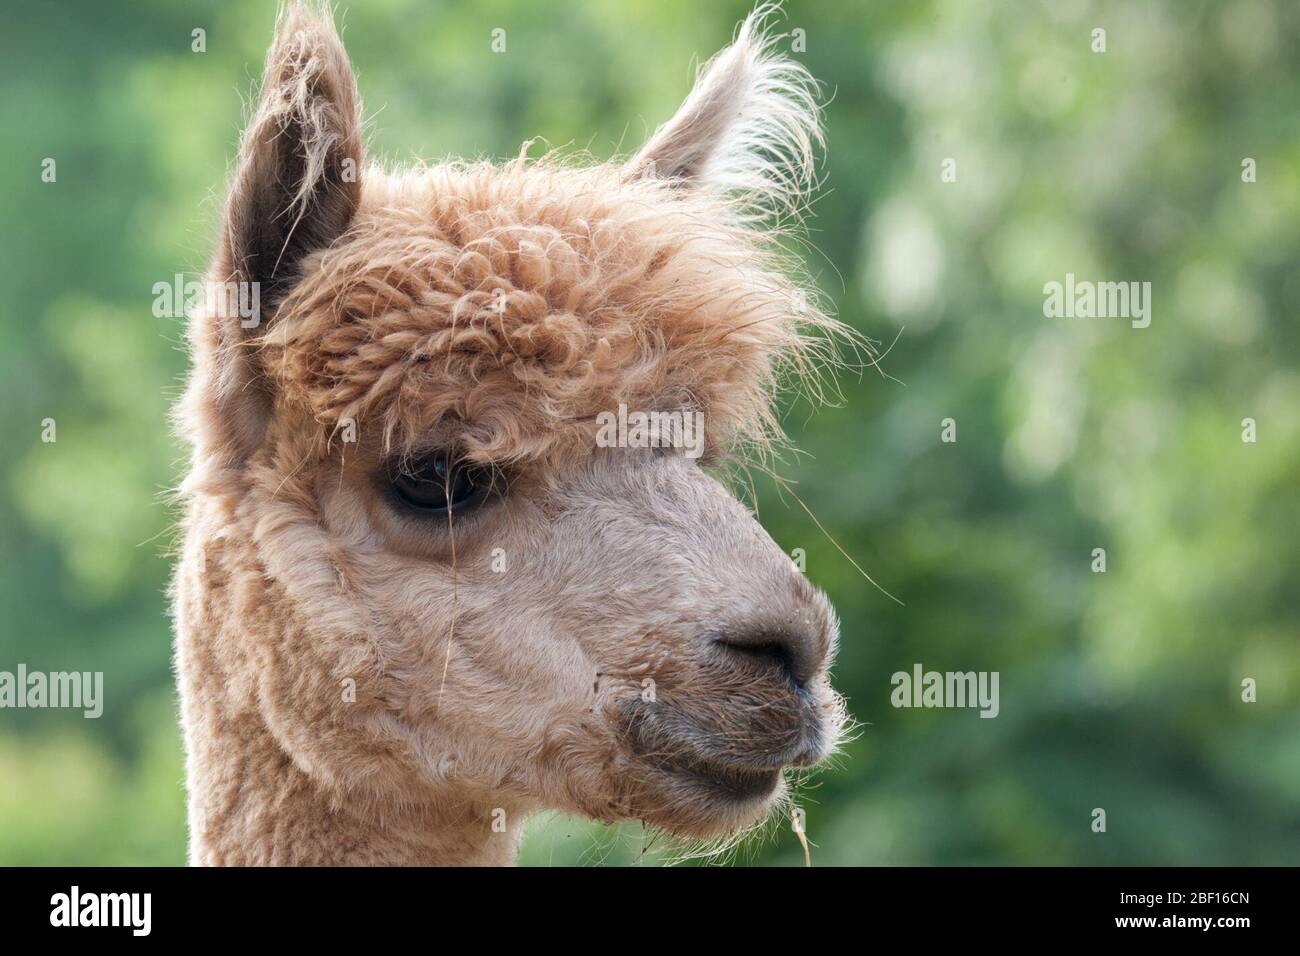 Genus lama hi-res stock photography and images - Alamy